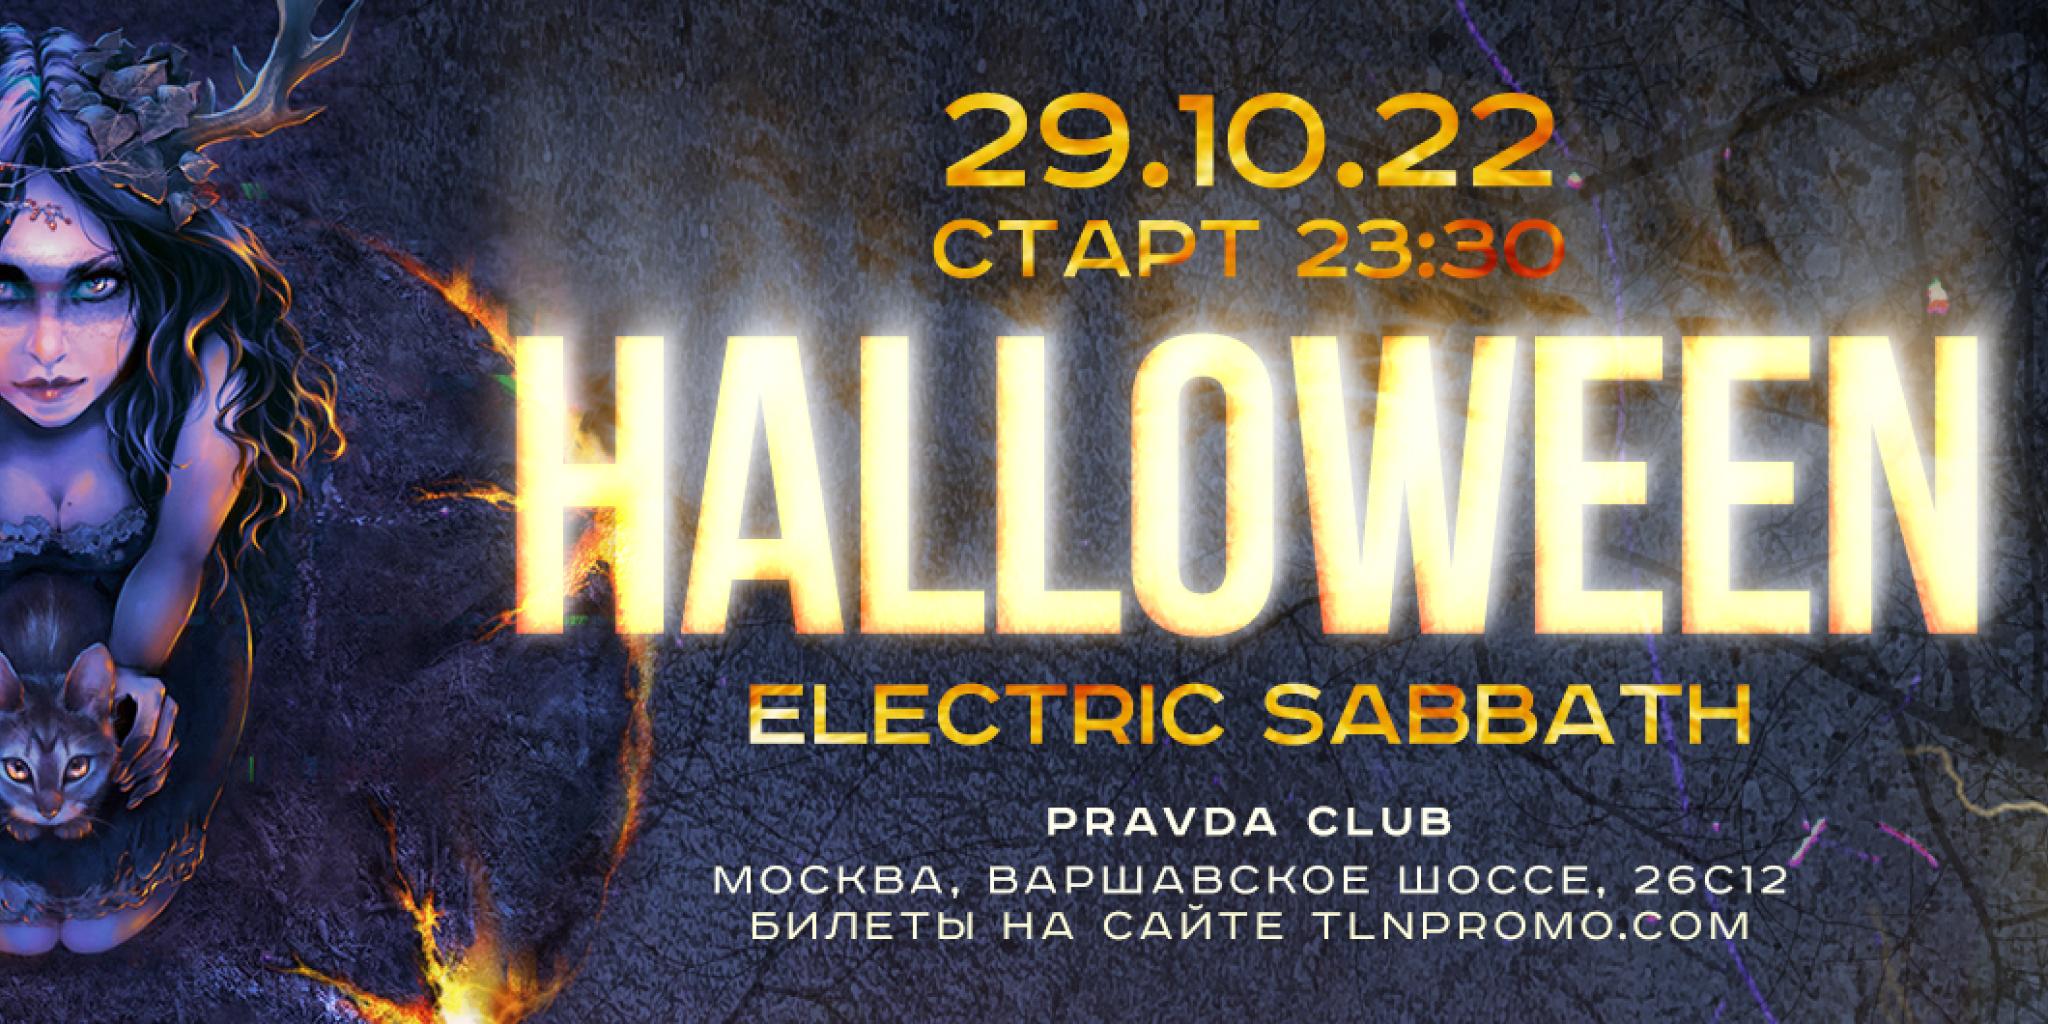 Halloween "Electric Sabbath"